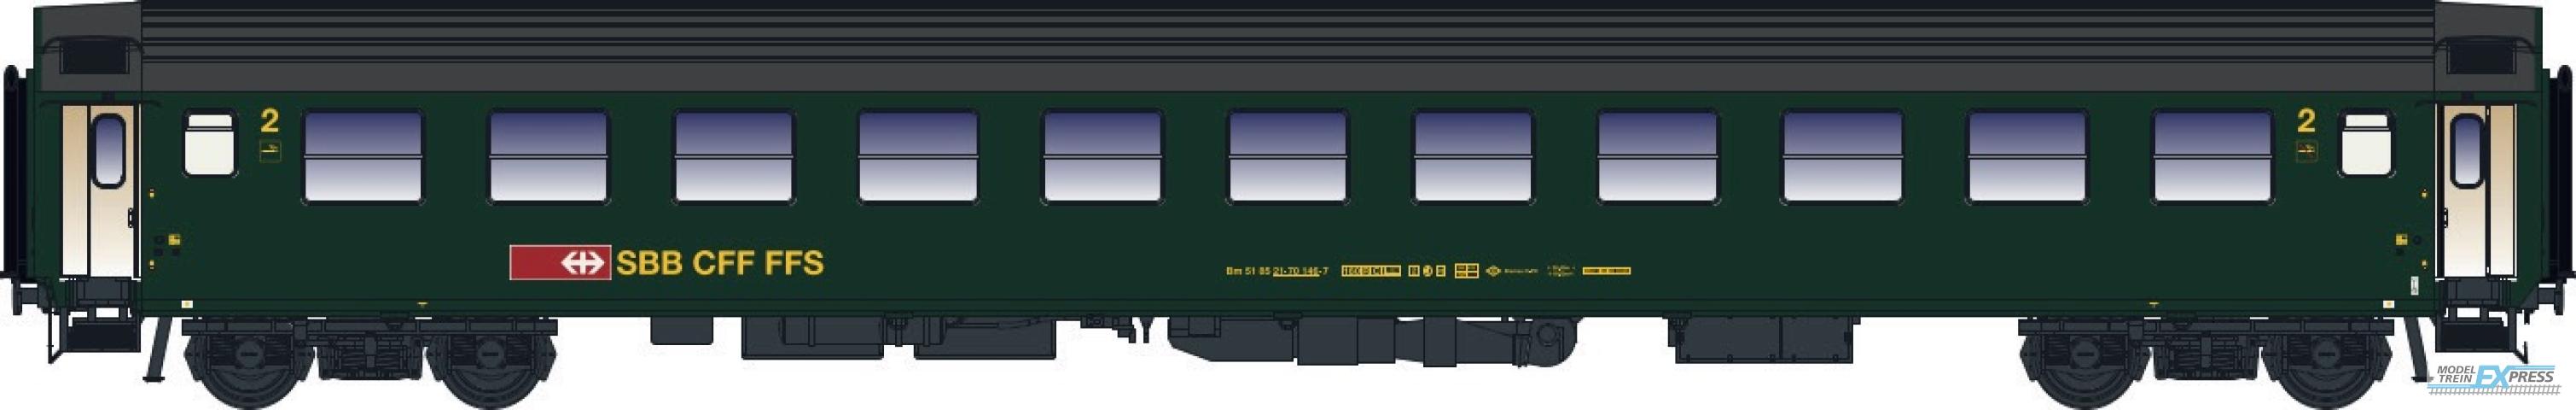 LS Models 472008 Bm, groen, nieuwe logo, 11 coupés  /  Ep. IV-V  /  SBB  /  HO  /  DC  /  1 P.